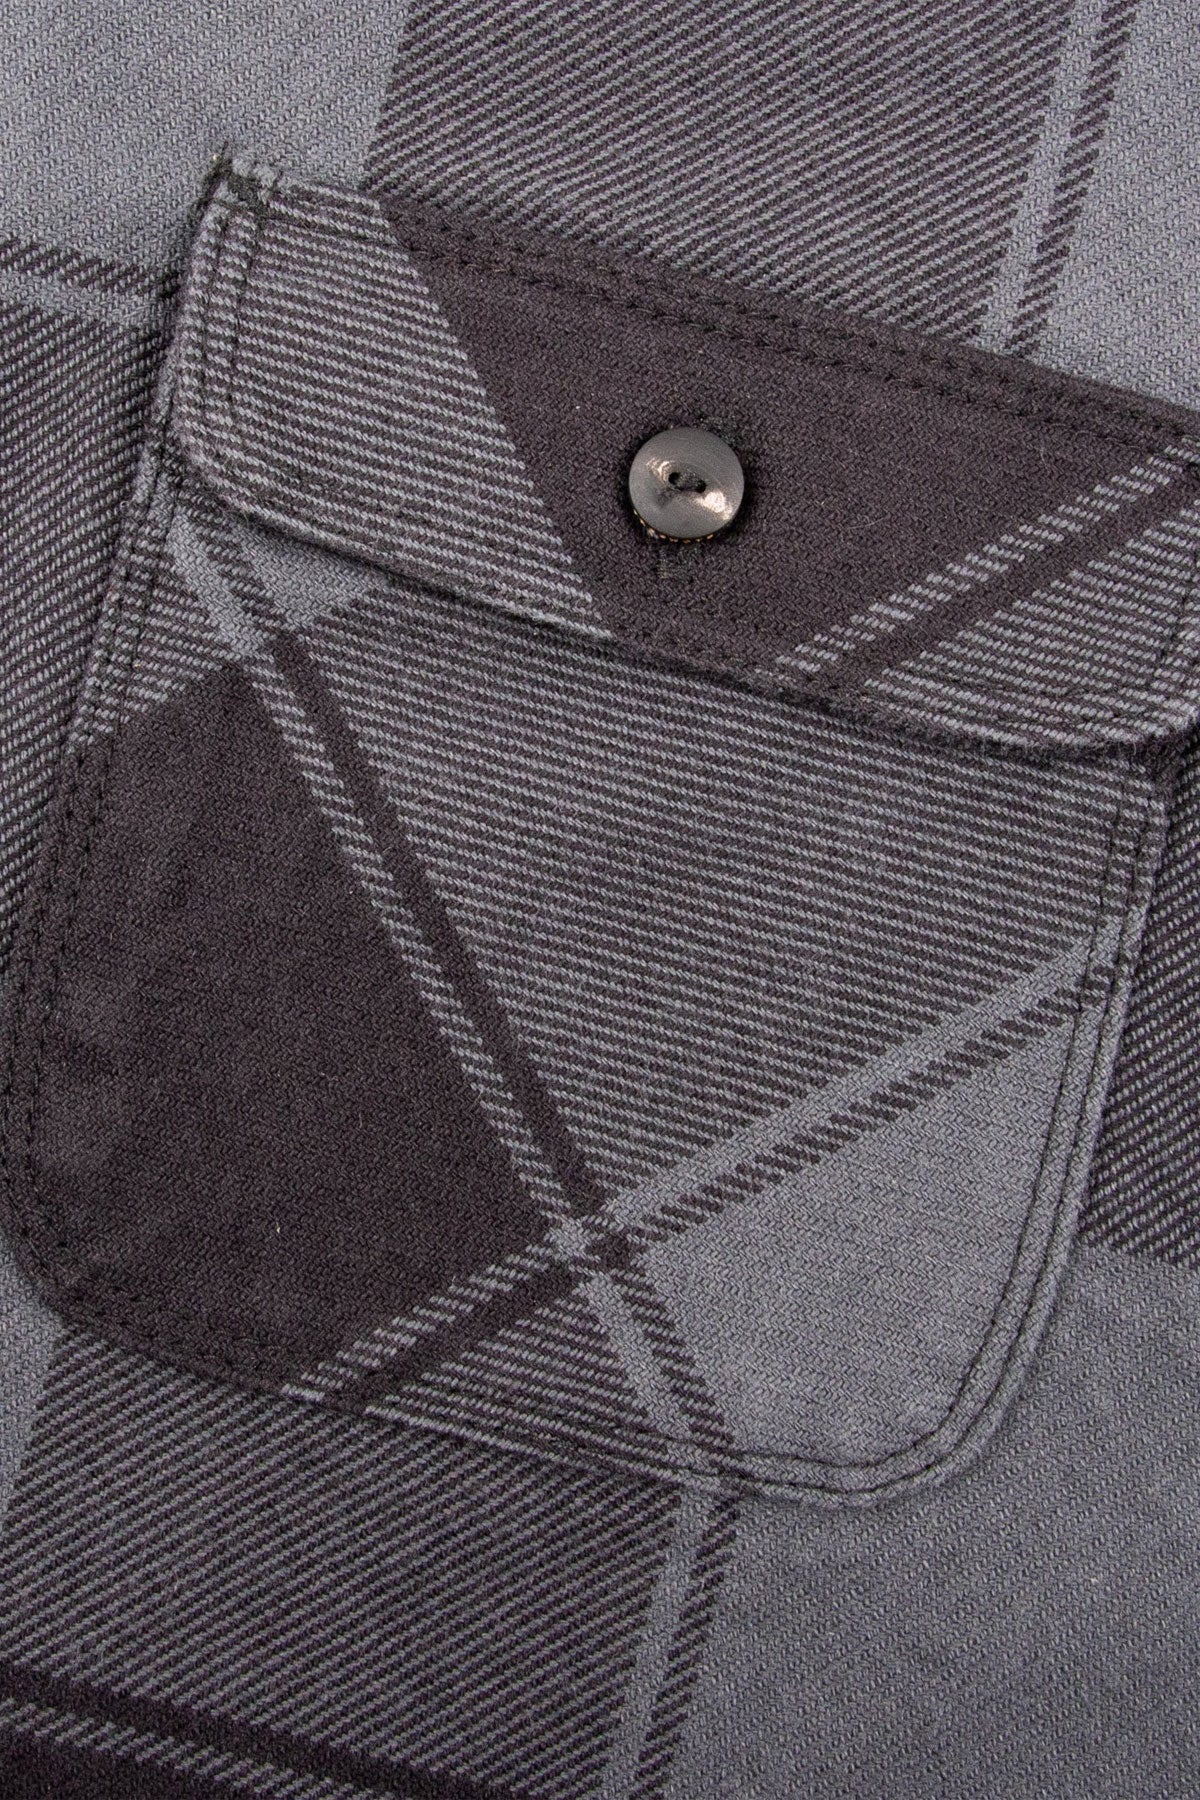 Freenote Cloth - Benson in Charcoal Buffalo Plaid